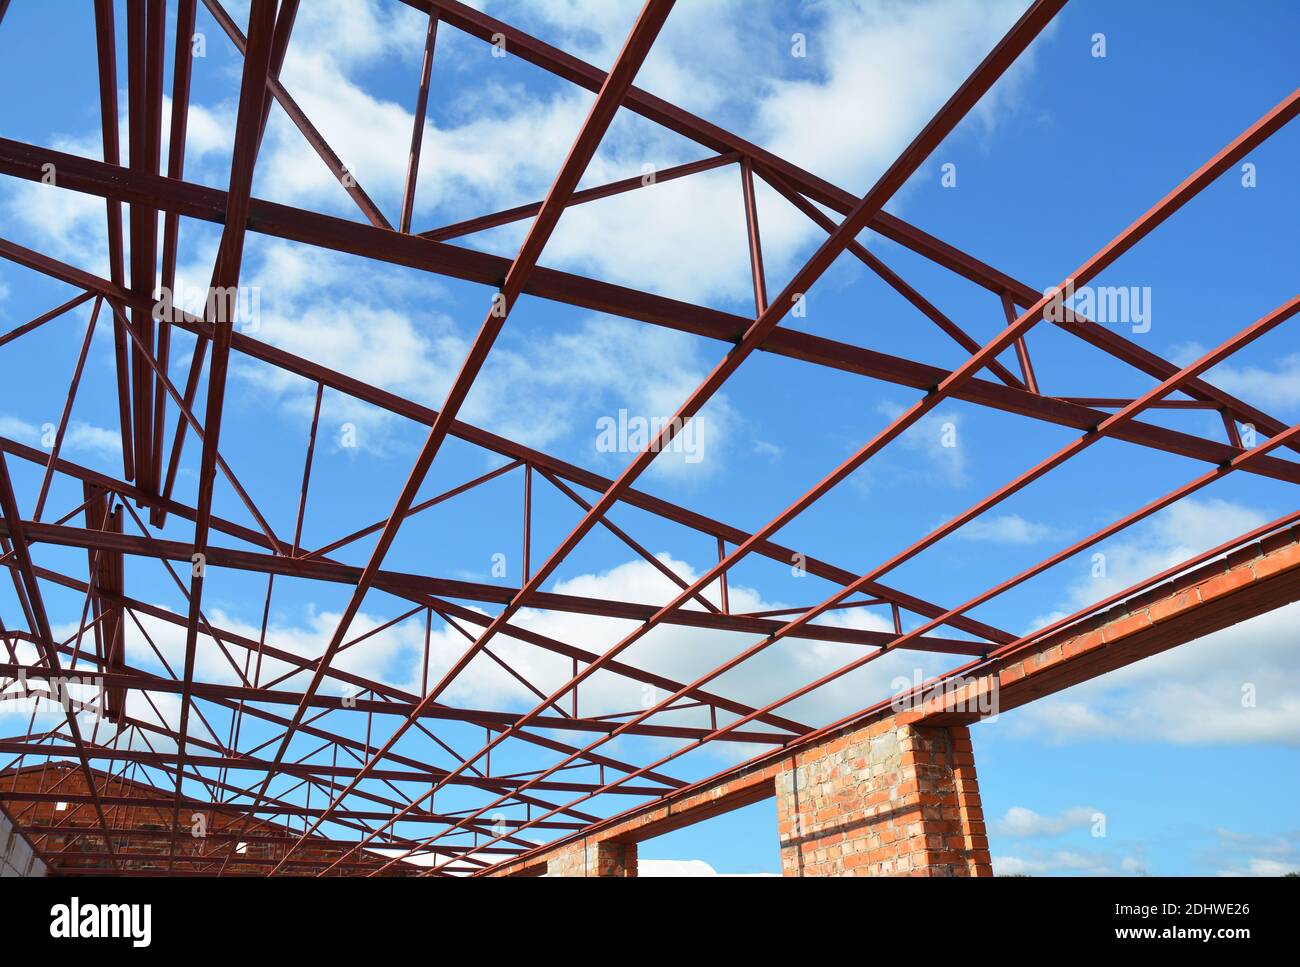 Dachbinder Aus Stahl. Dachkonstruktion. Metall Dachrahmen Haus Konstruktion mit Stahl Dachbinder Details. Stockfoto